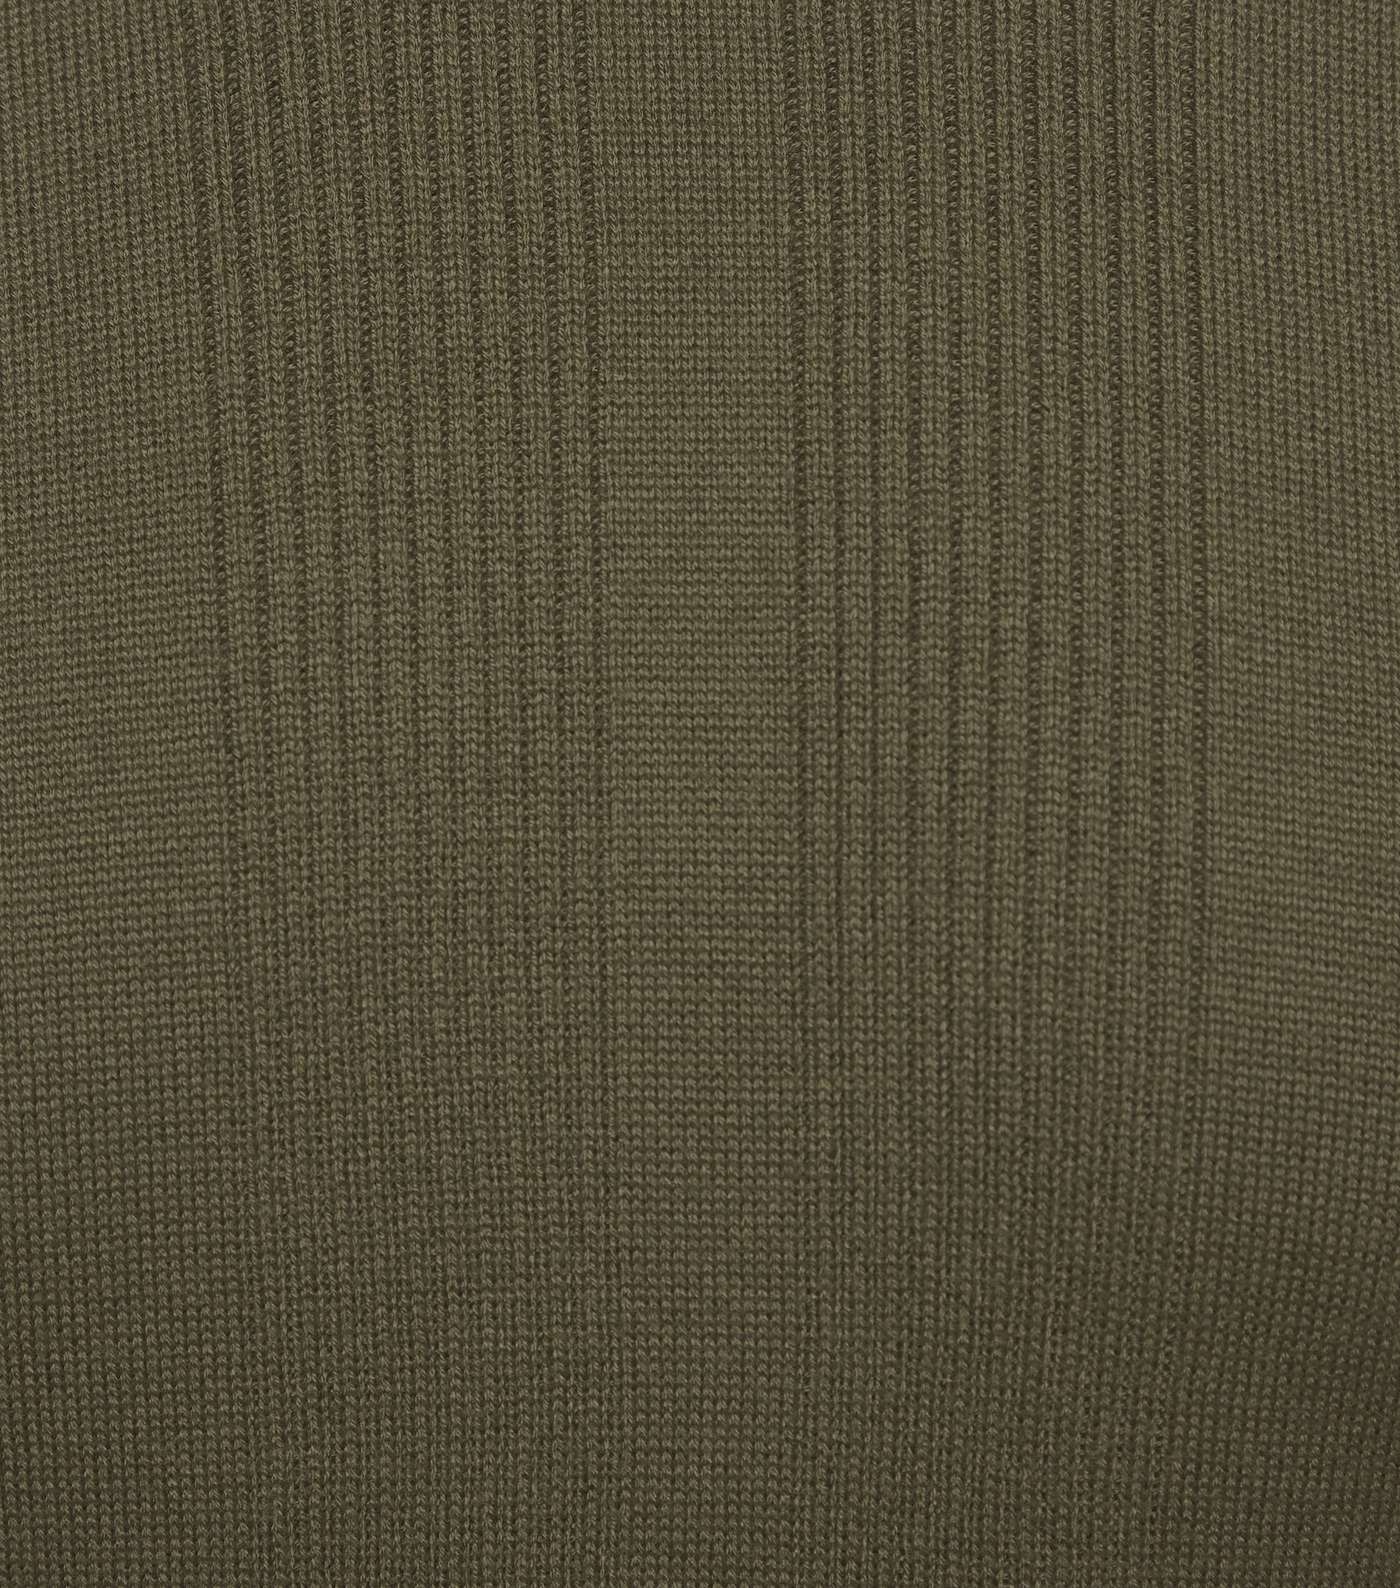 Khaki Ribbed Knit Muscle Fit T-Shirt Image 6